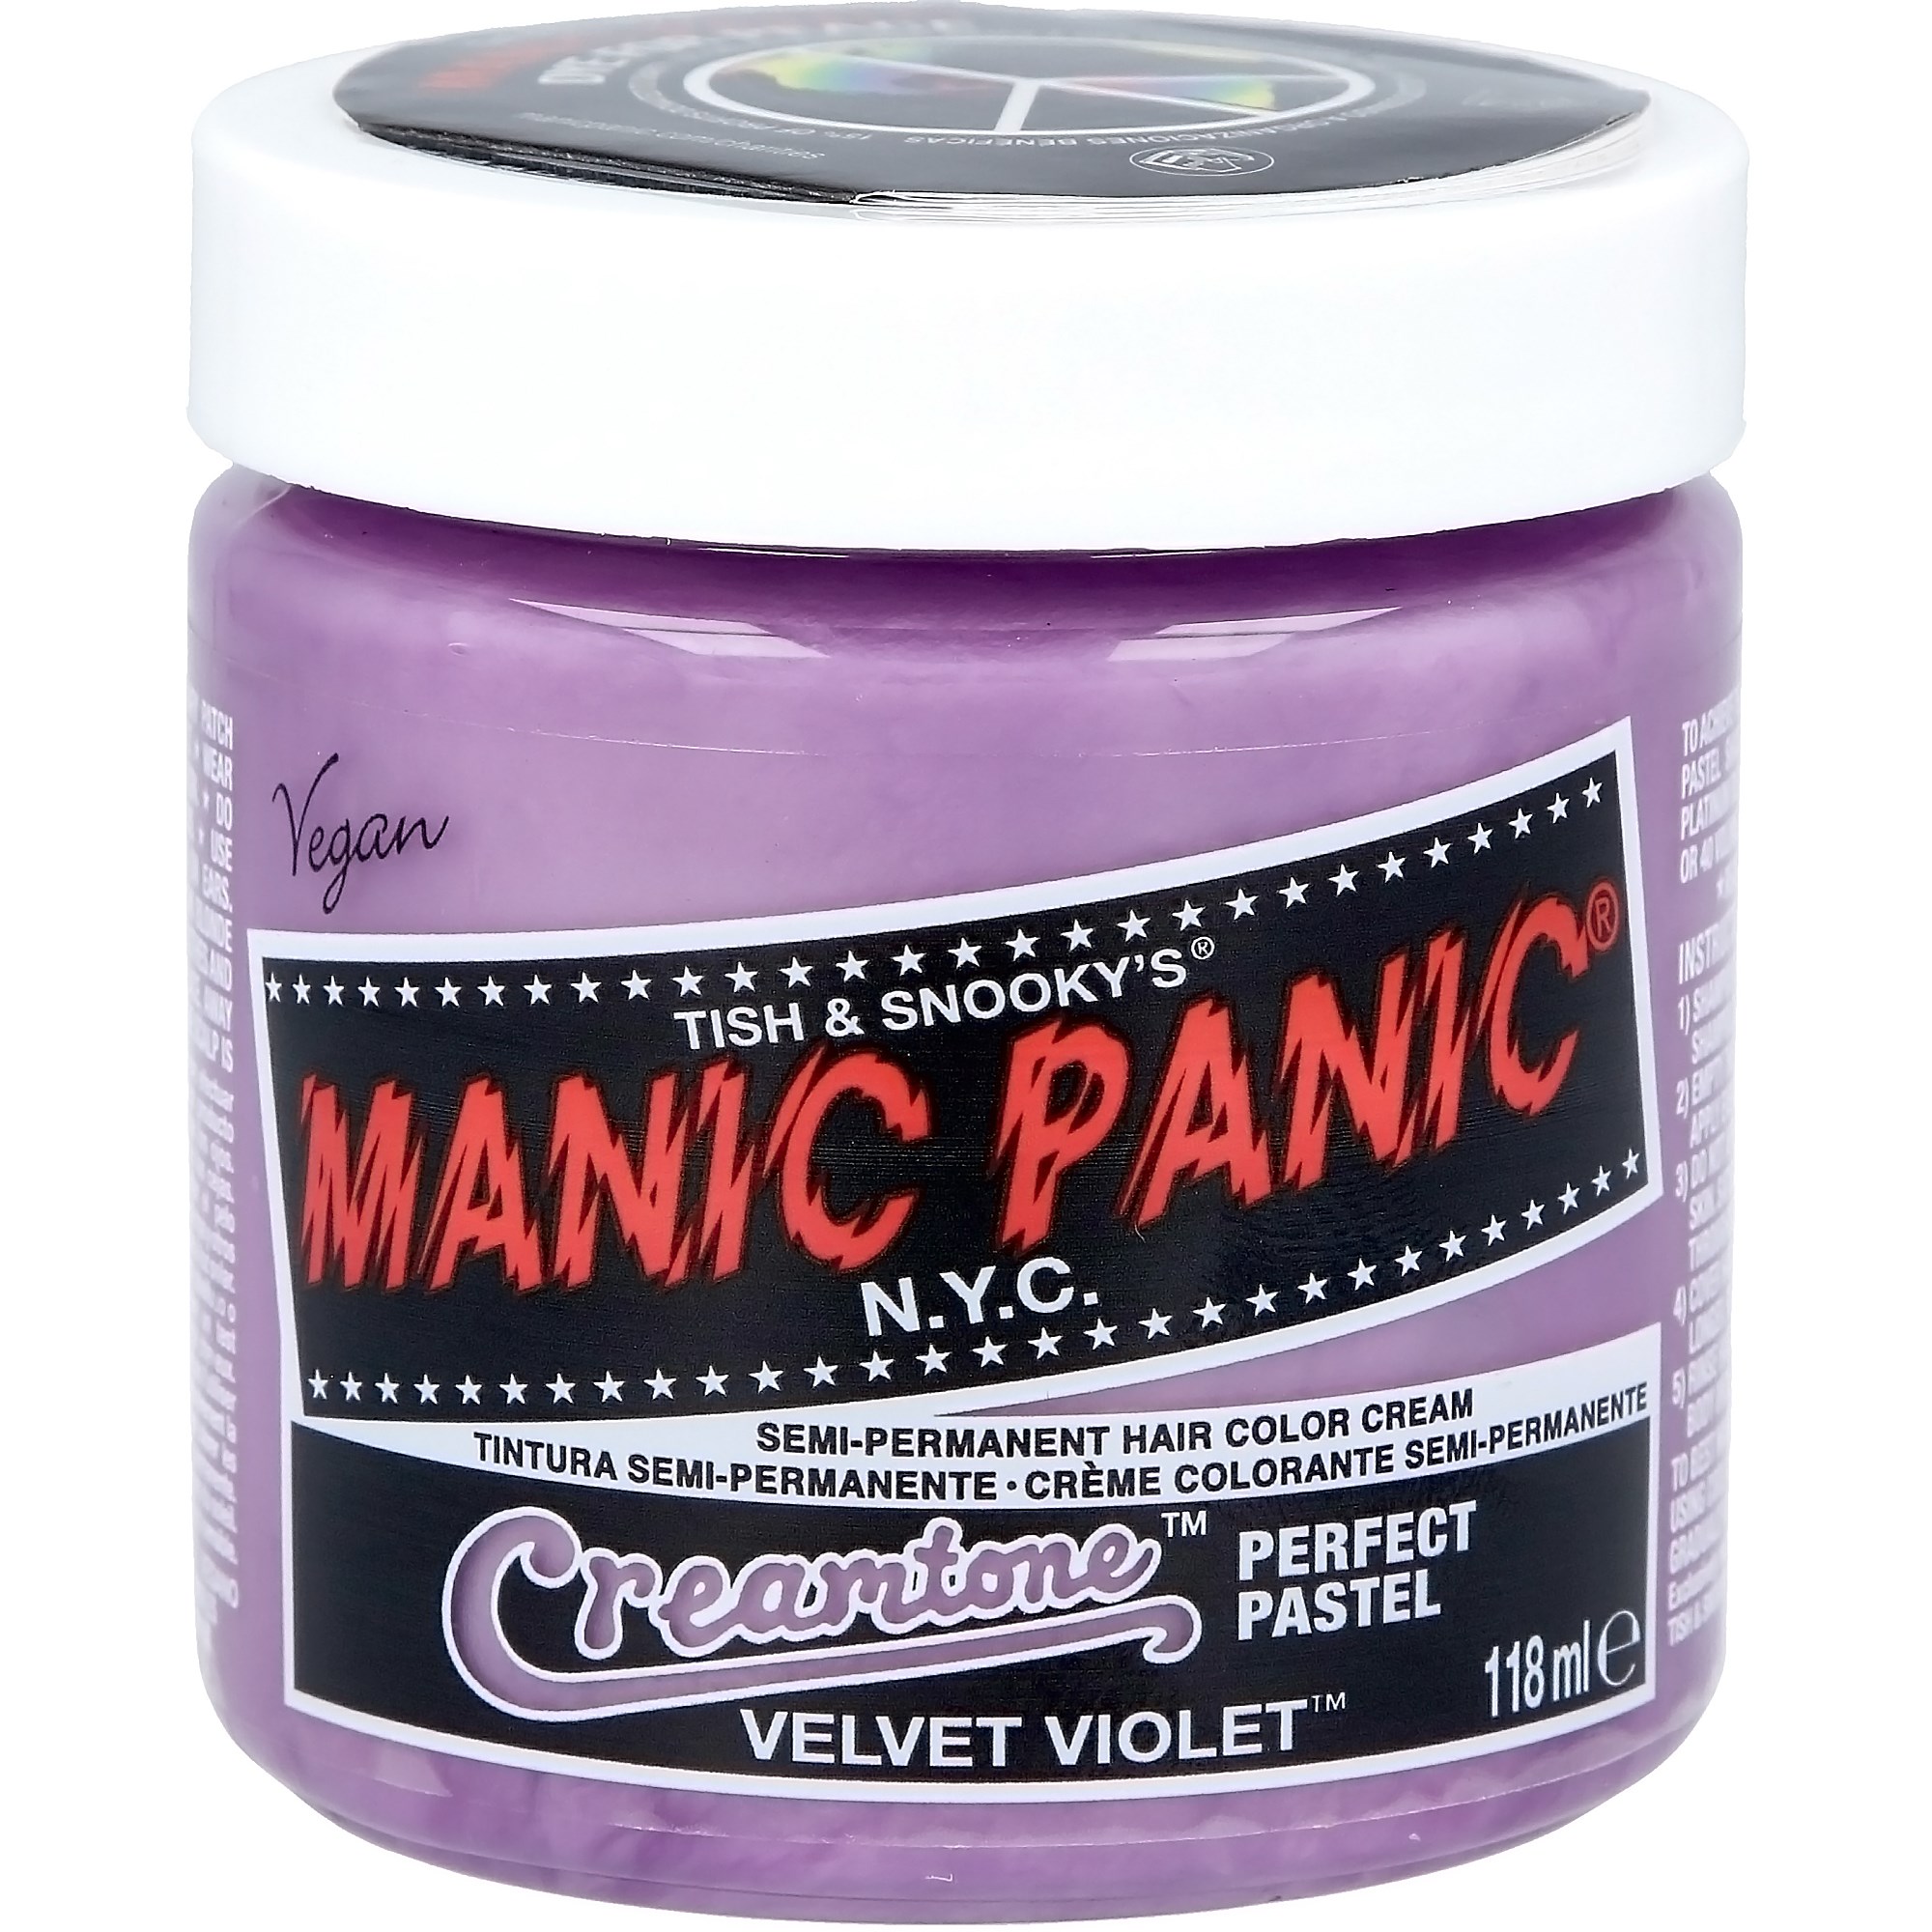 Manic Panic Classic Velvet Violet